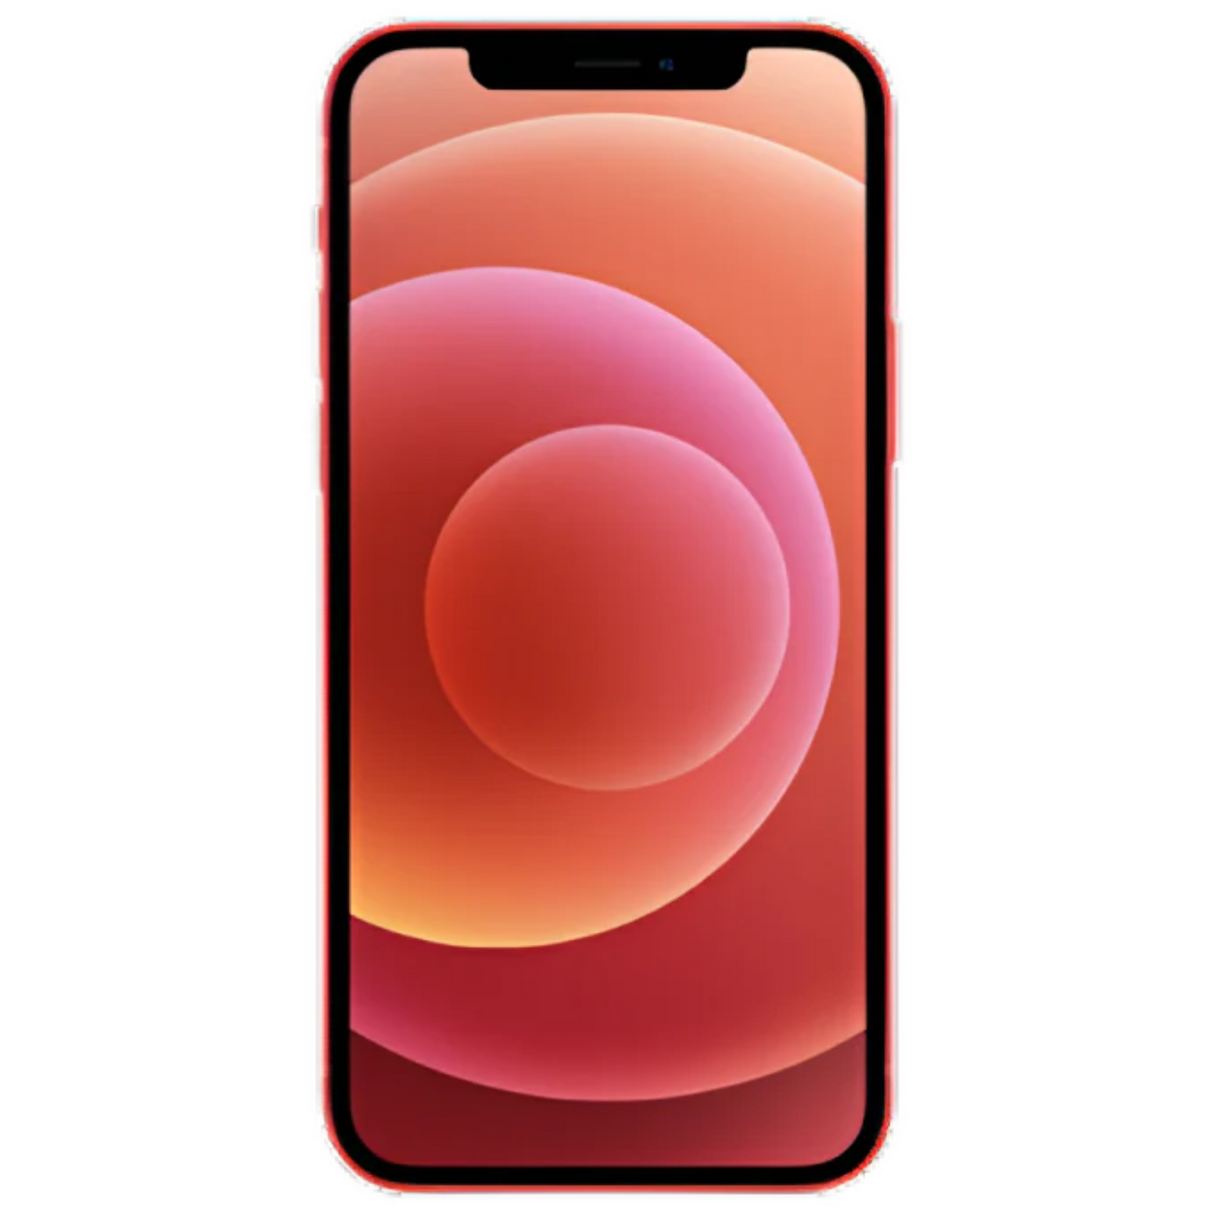 Apple iPhone 12 | RED, 4GB RAM, 64GB Storage (Refurbished)